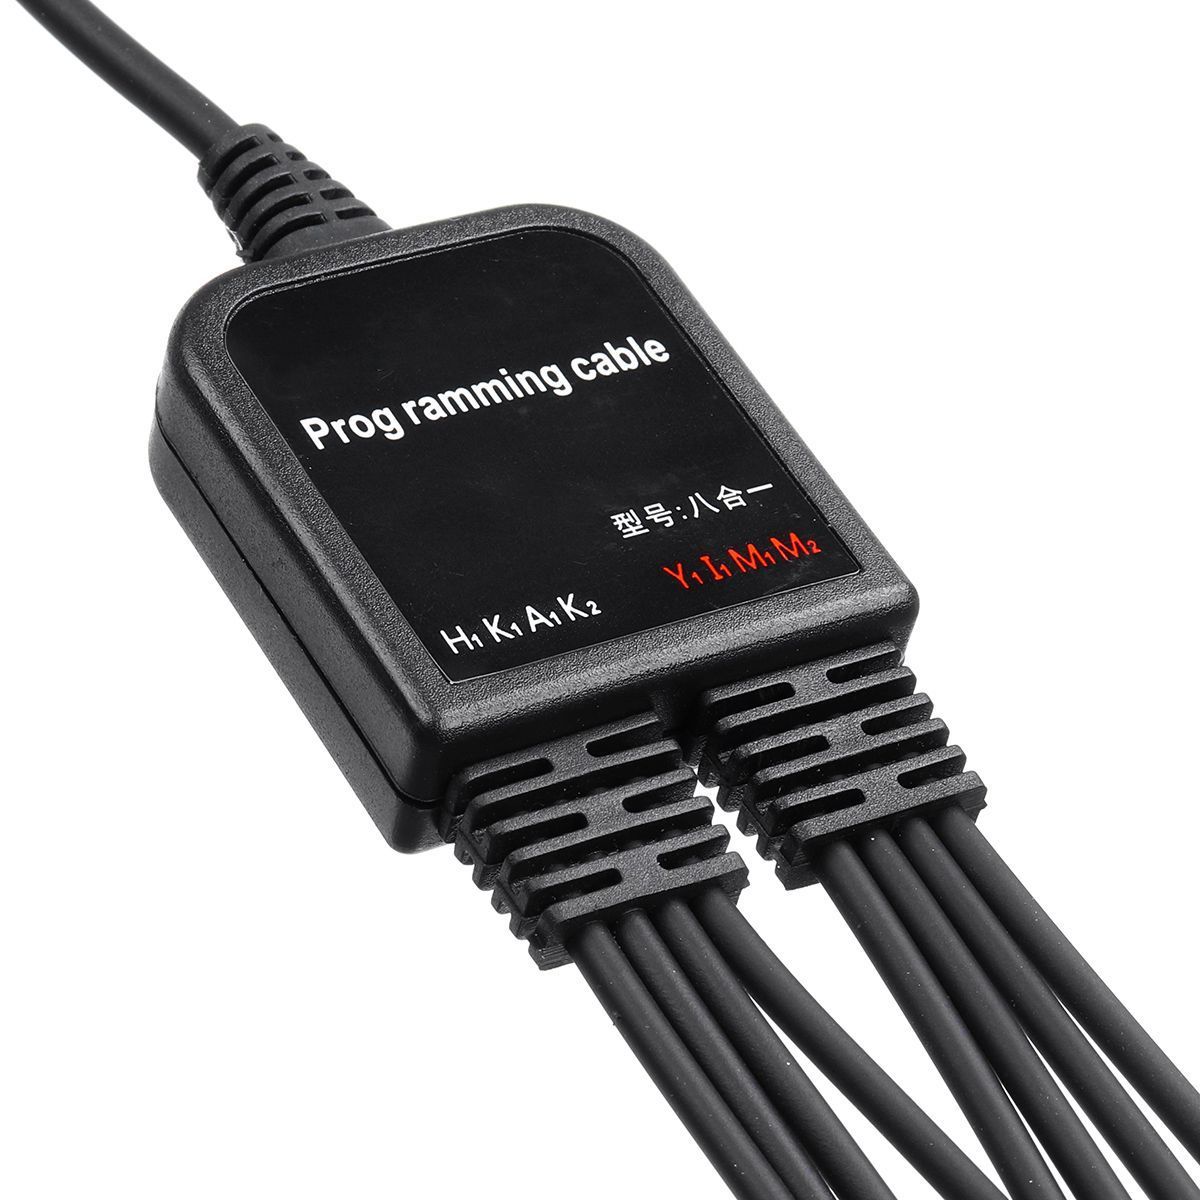 8-In-1-Multiple-Radio-USB-Programming-Data-Cable-Cord-for-Baofeng-Motorola-Kenwood-1485154